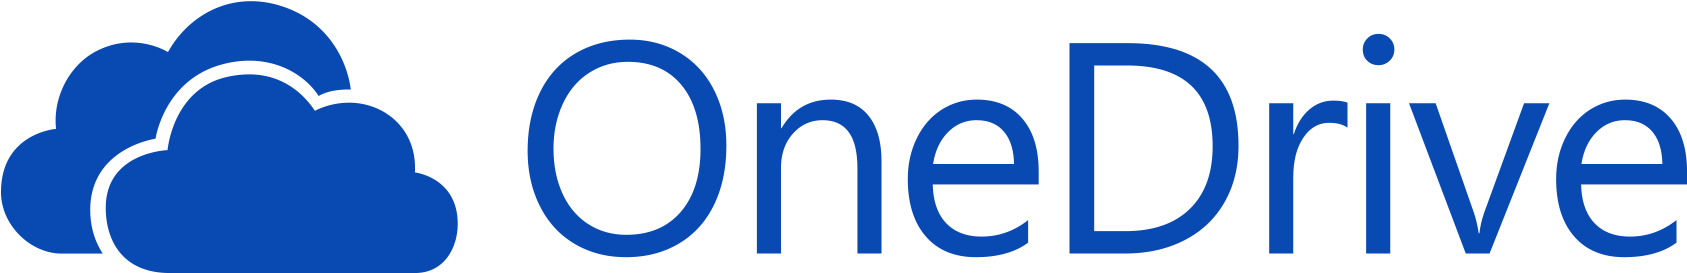 Microsoft Office Logo 2014 Download - Microsoft Office Logo 2014 Download (1686x285)